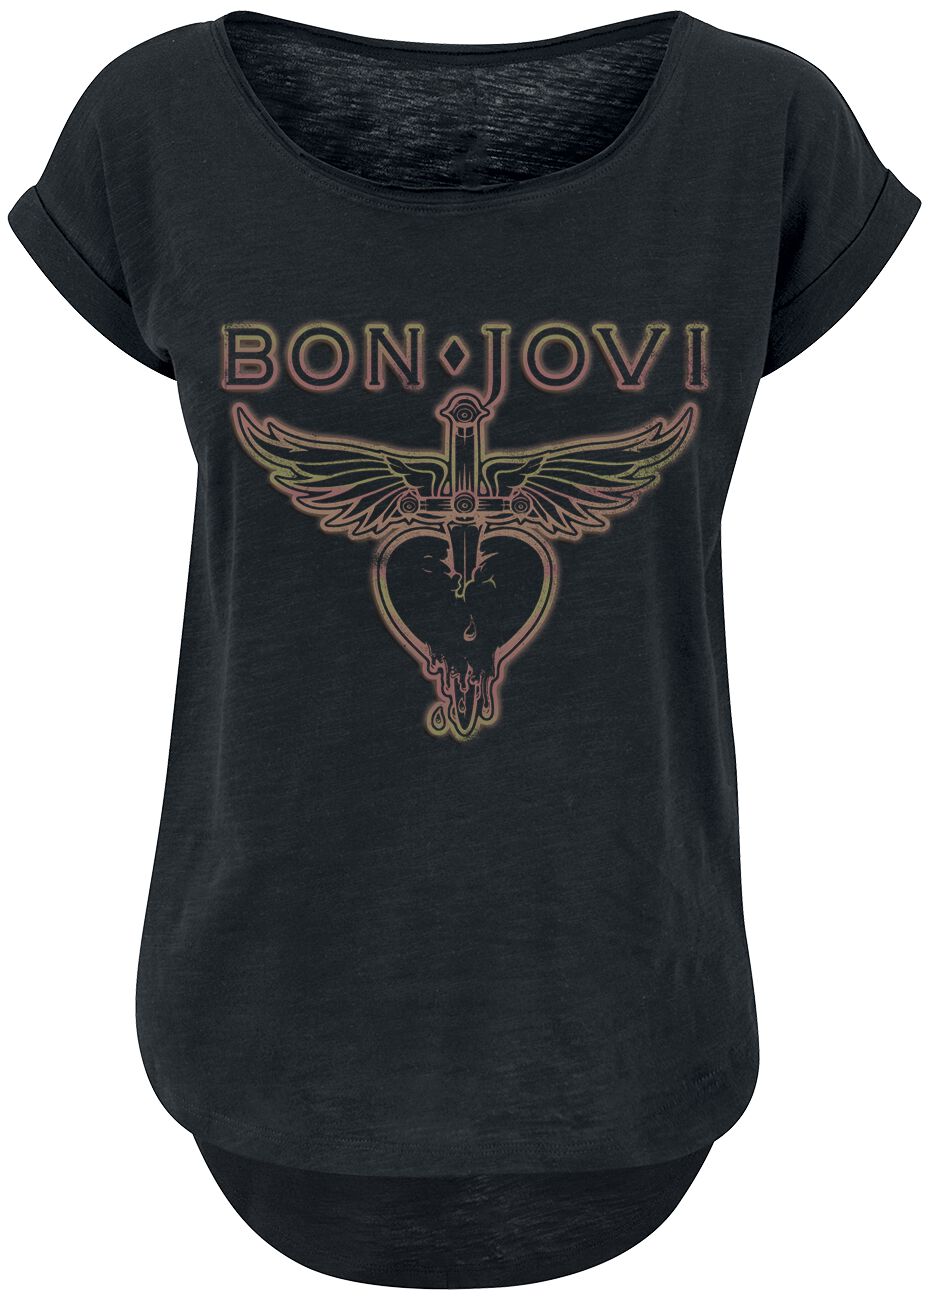 bon jovi t-shirt - heart & dagger outline - s bis 3xl - fÃ¼r damen - grÃ¶ÃŸe xl - - lizenziertes merchandise! schwarz donna